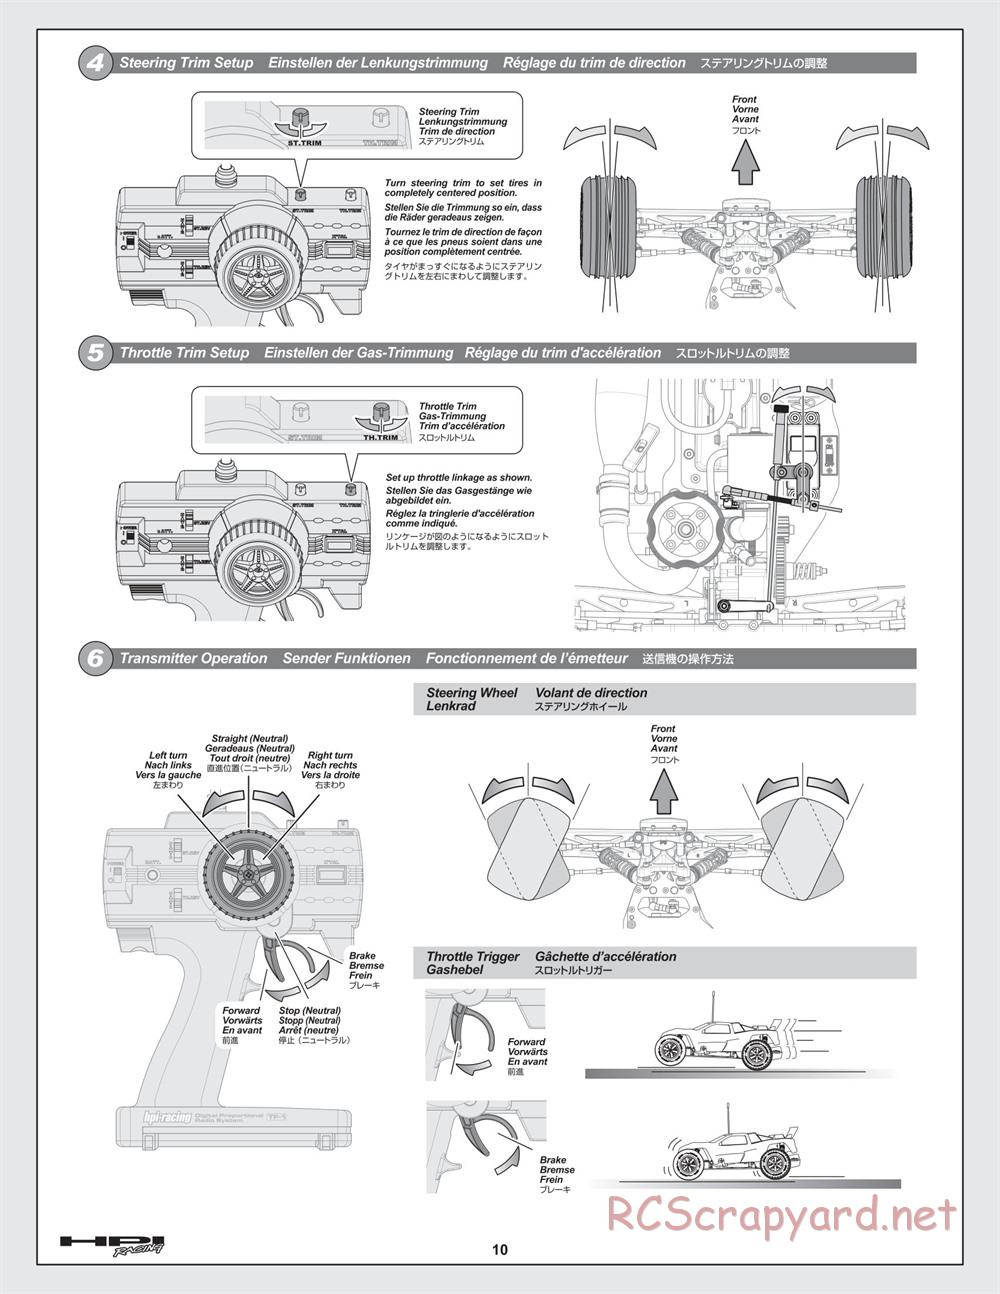 HPI - Firestorm 10T - Manual - Page 10